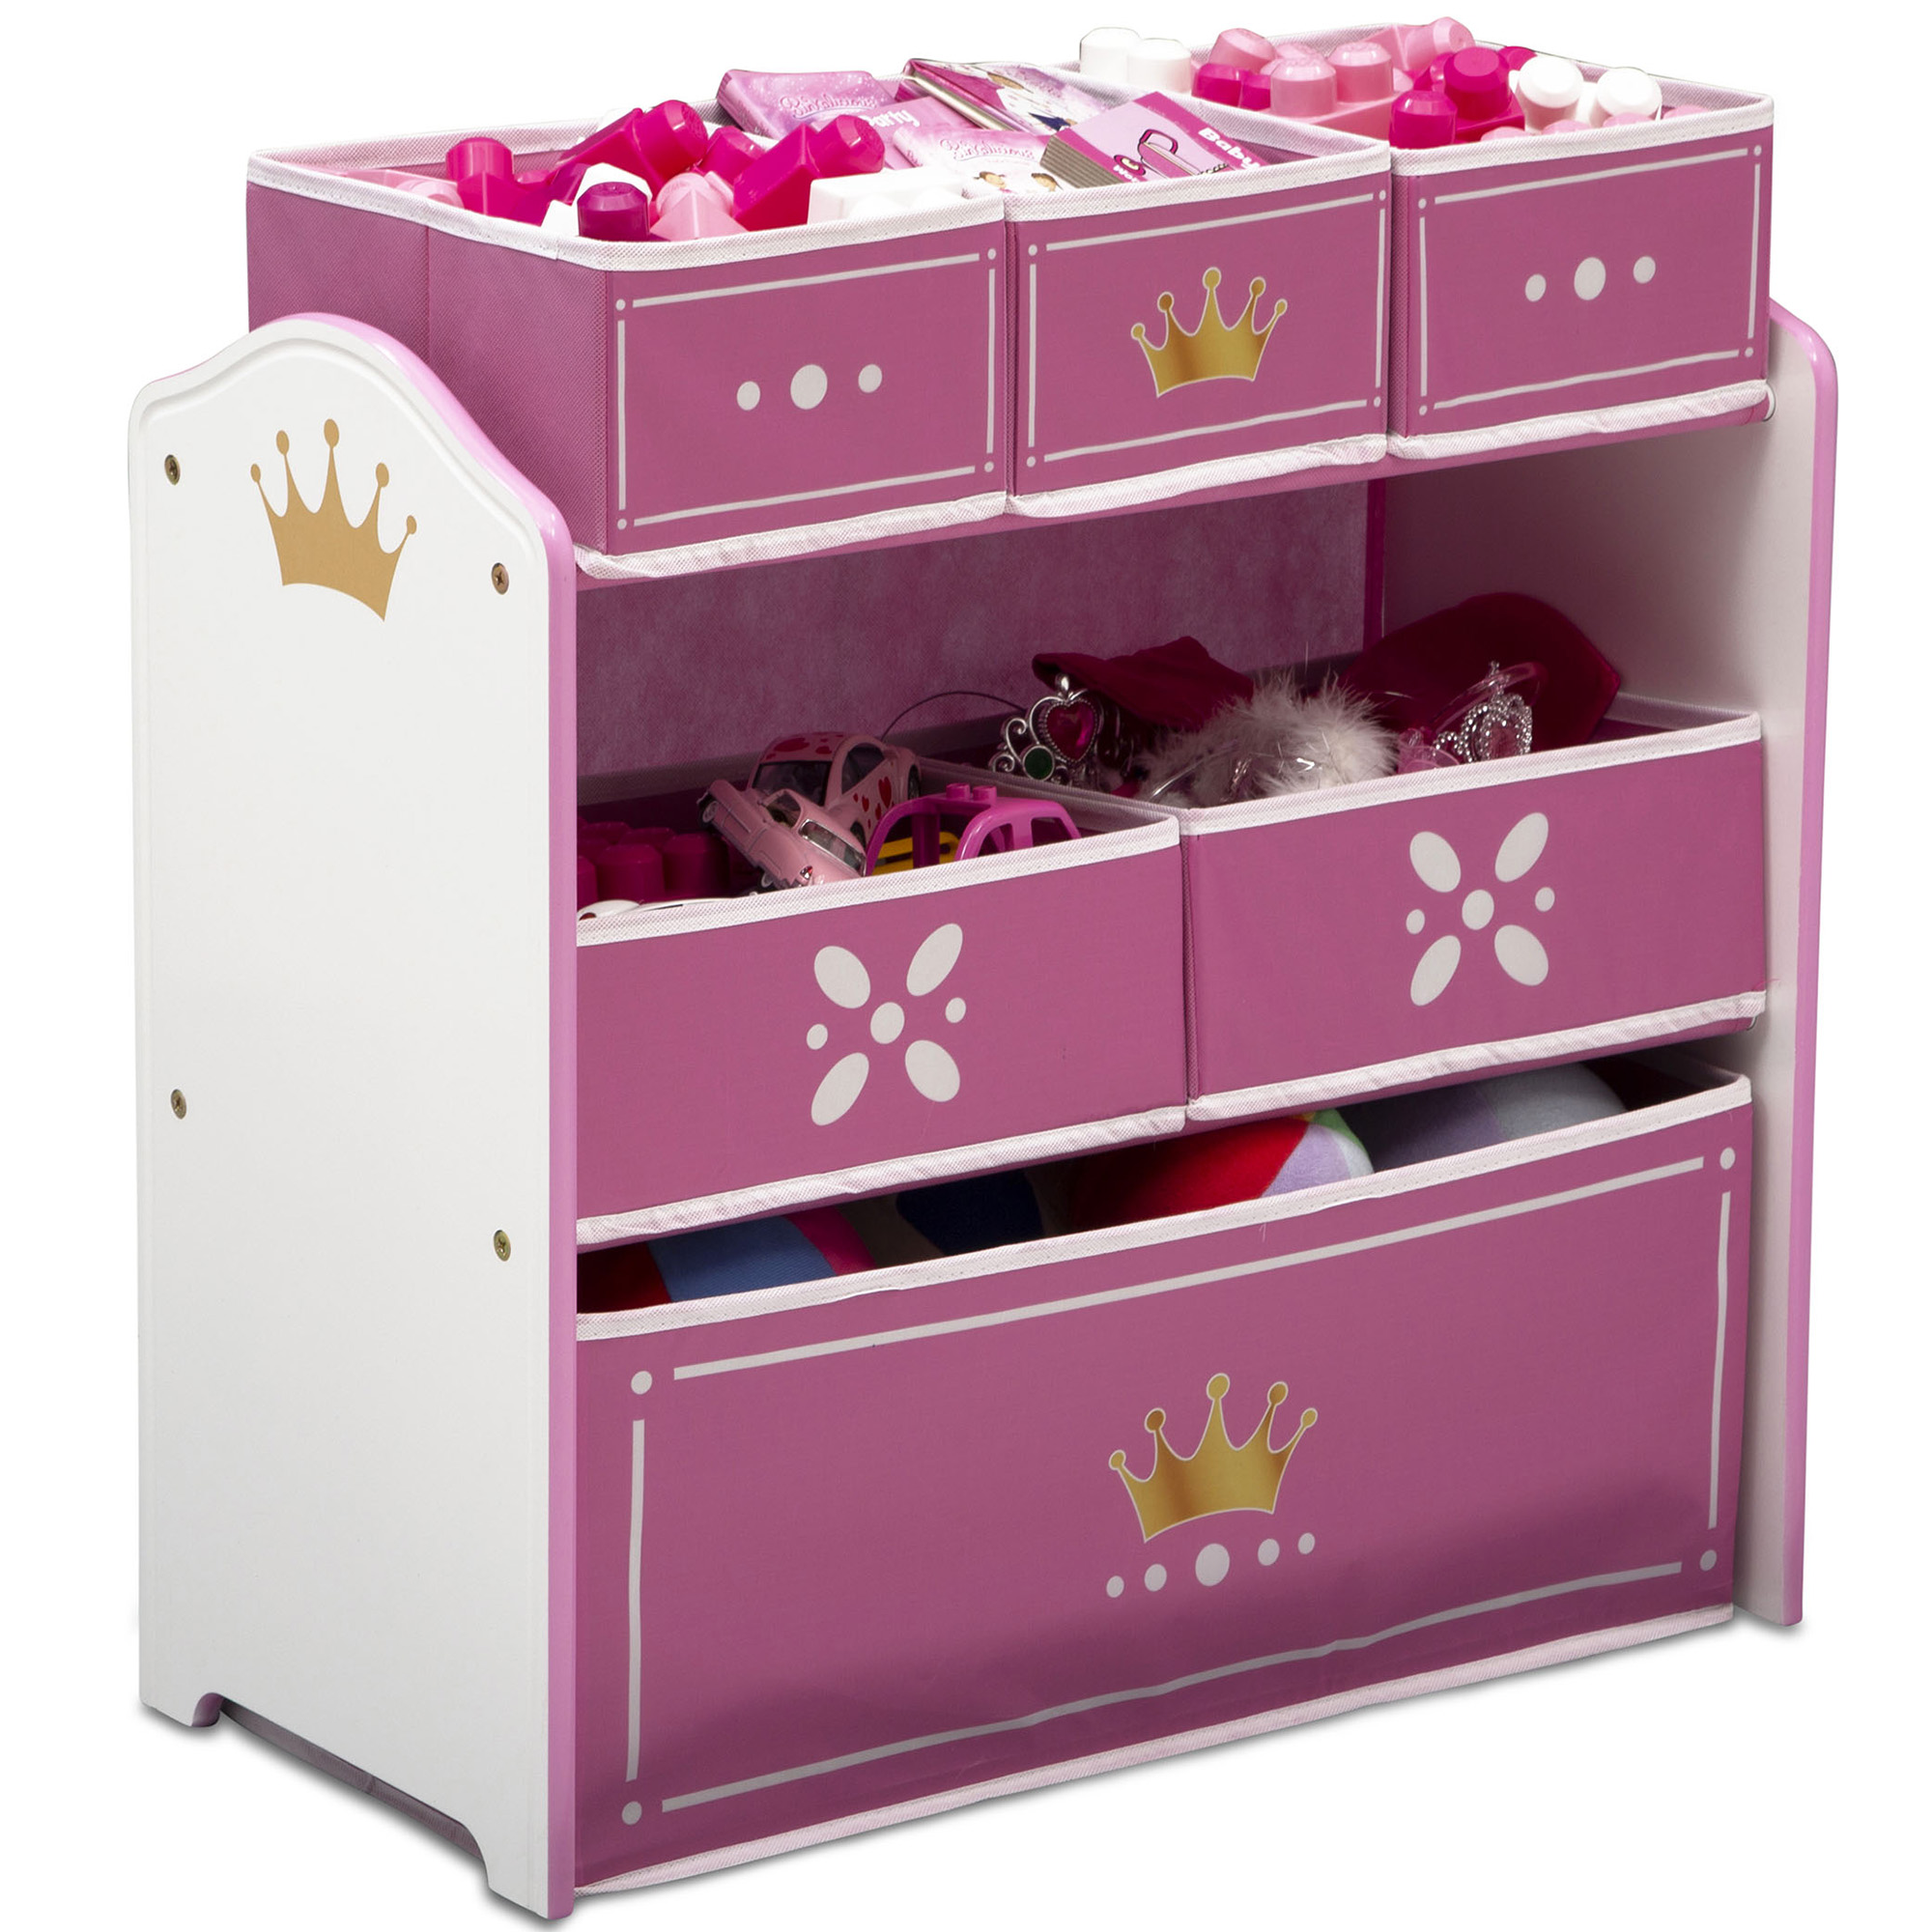 Delta Children Princess Crown 6 Bin Storage Toy Organizer, Greenguard Gold Certified, Solid Wood & Fabric, White/Pink - image 1 of 7